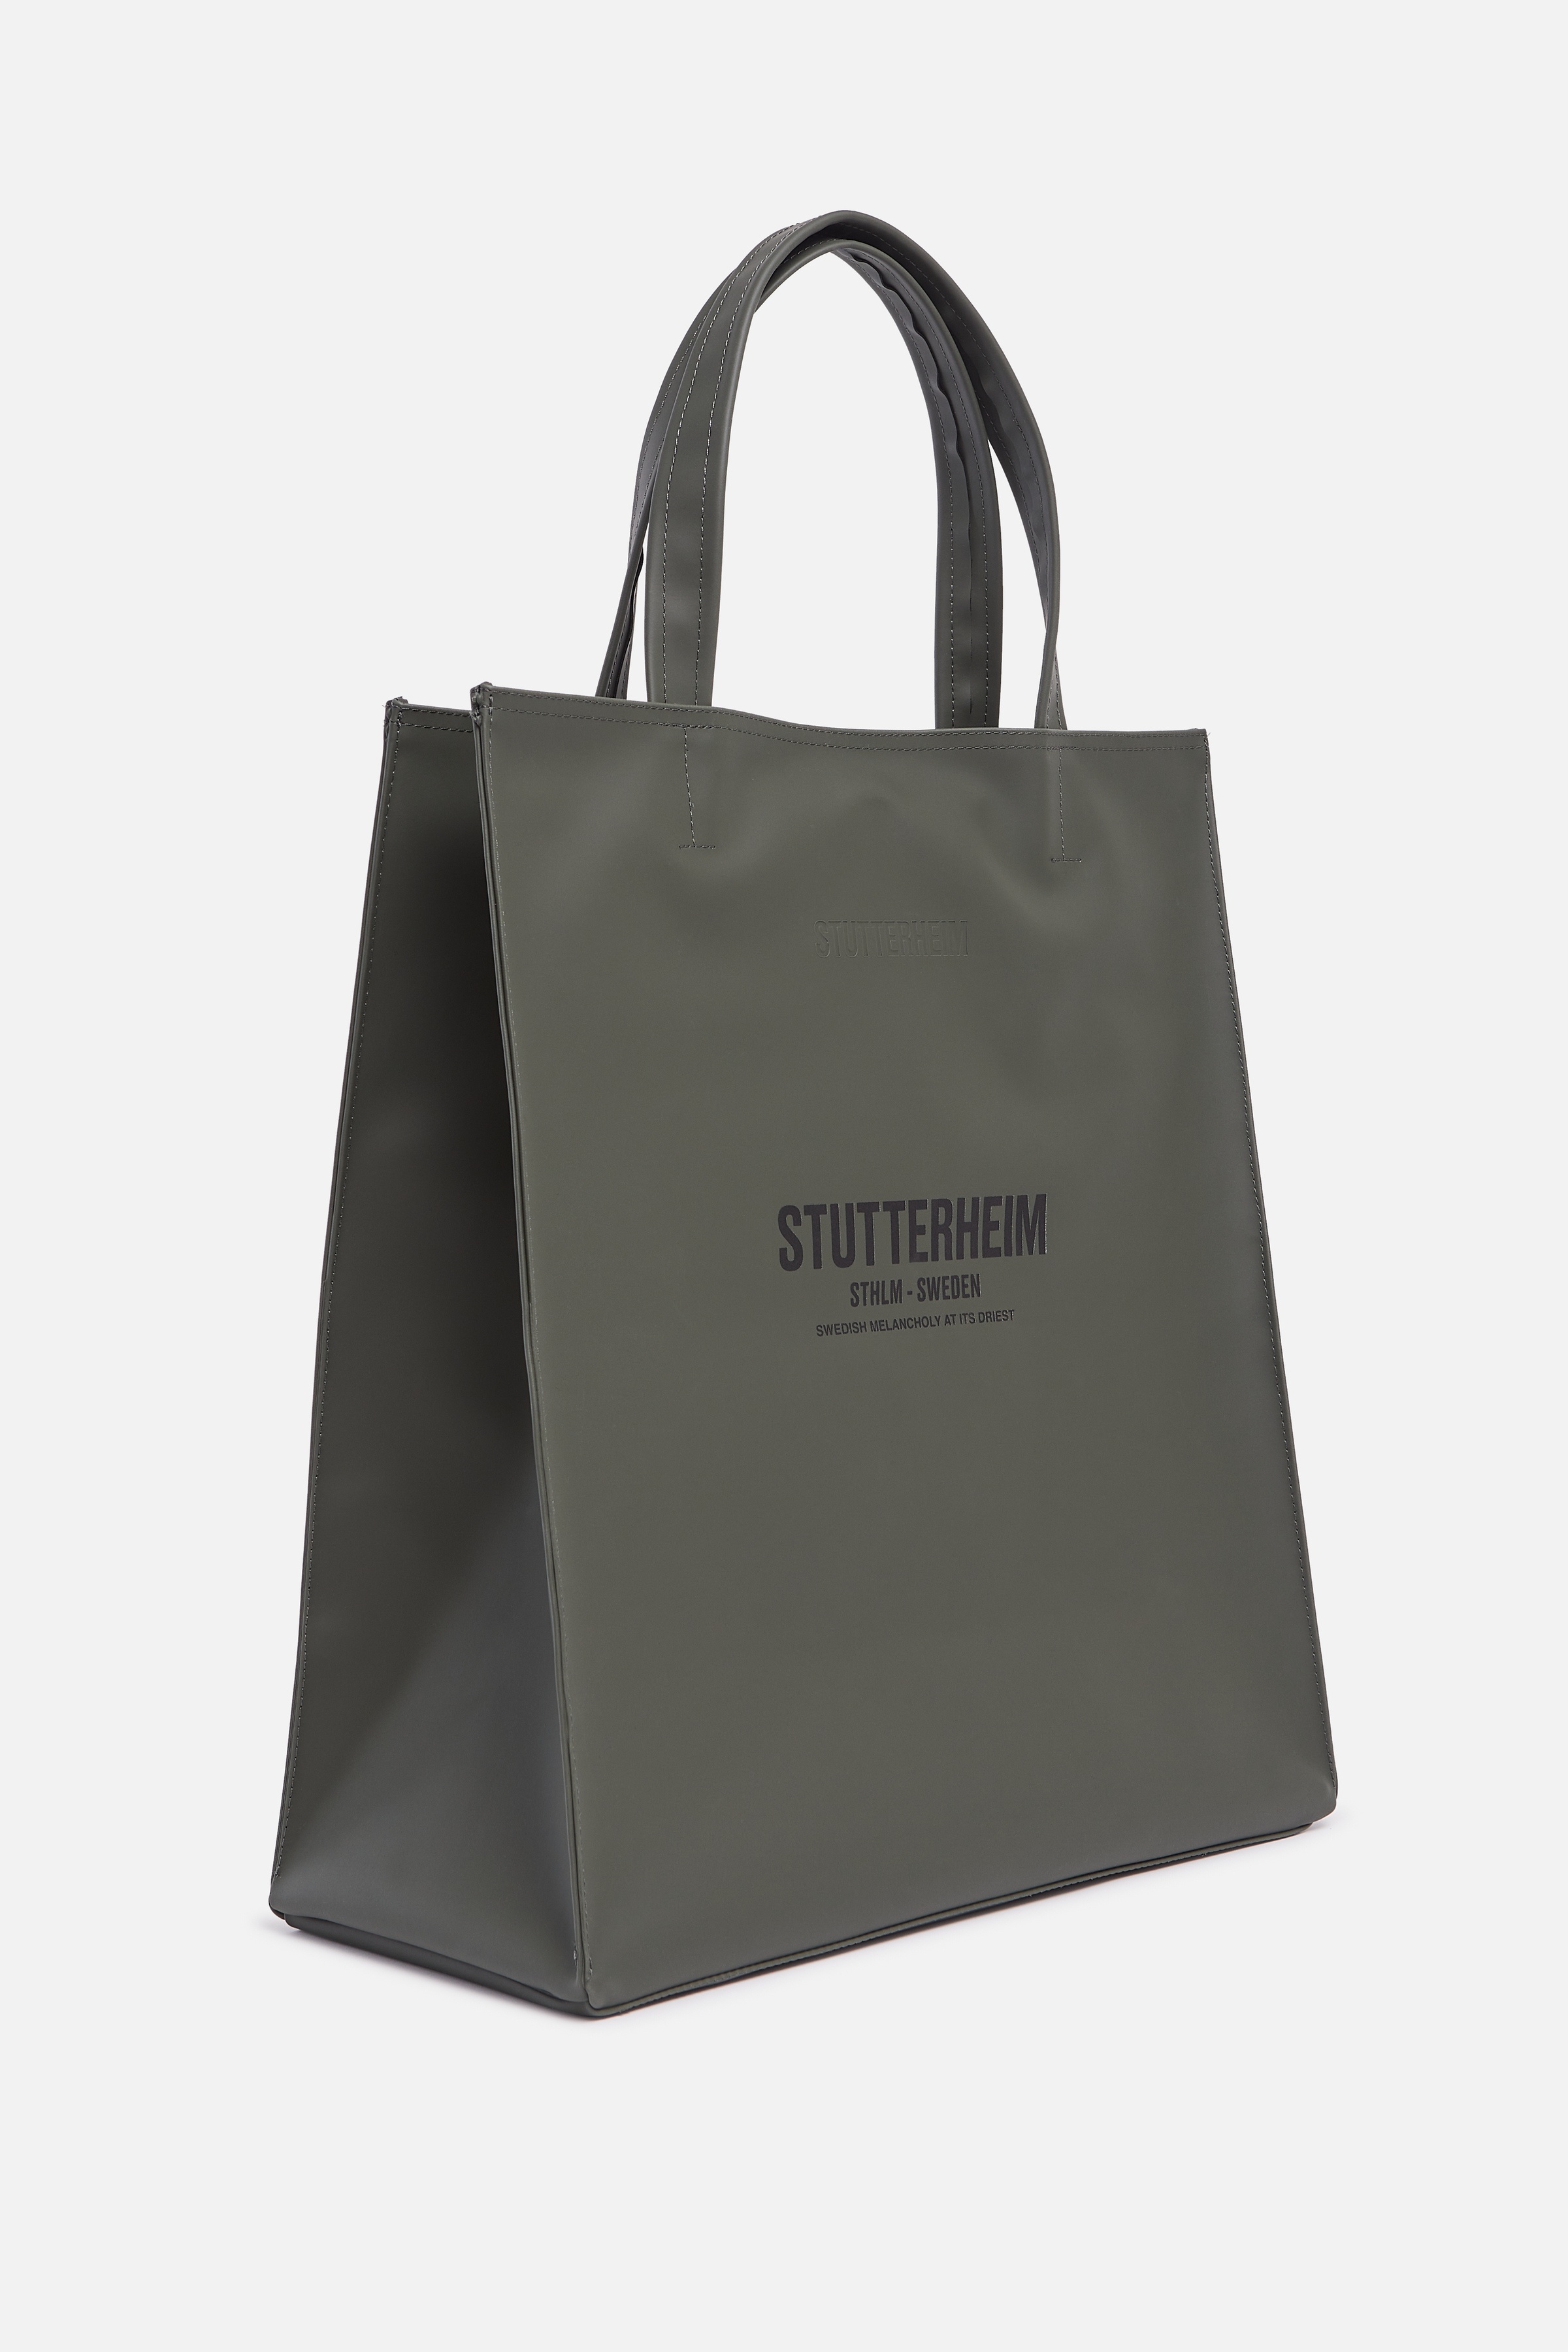 Stylist Bag Green - 2